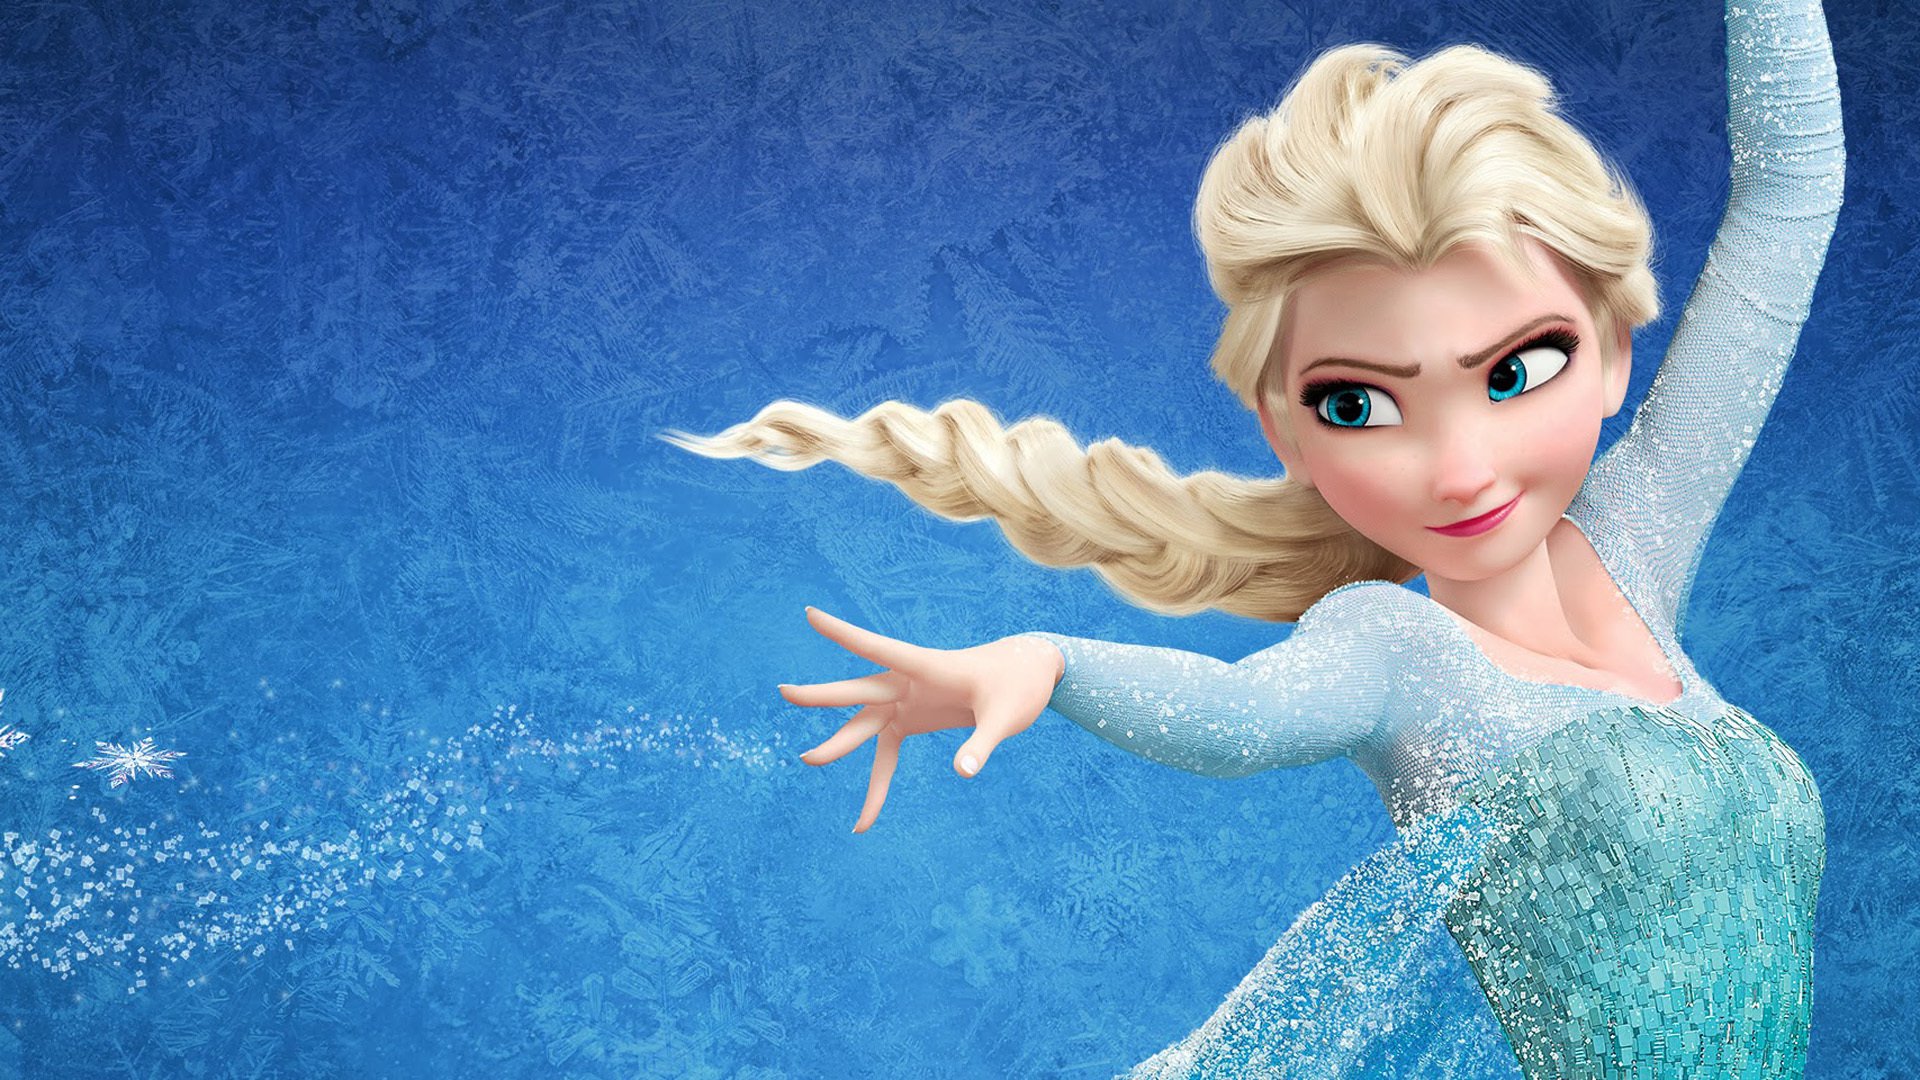 Download mobile wallpaper Frozen, Movie, Elsa (Frozen) for free.